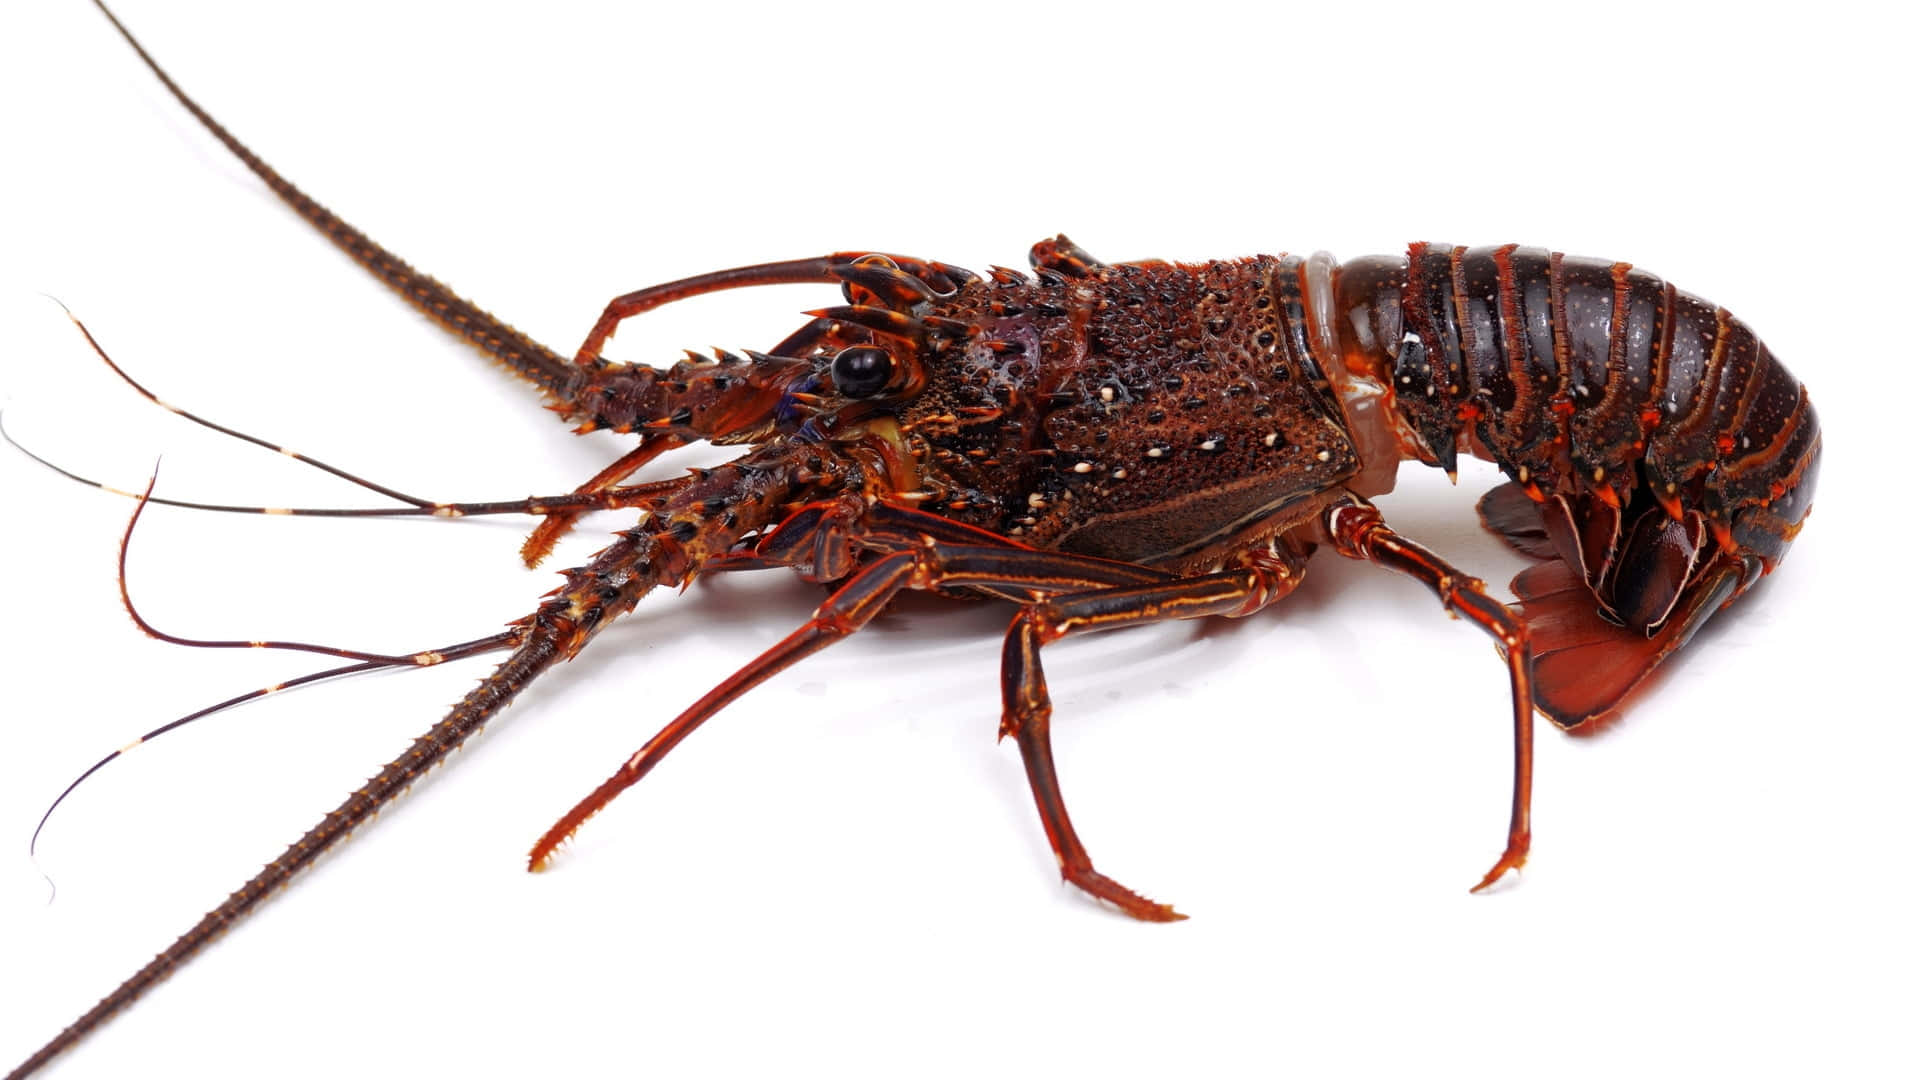 A Tasty Lobster Awaiting Your Enjoyment